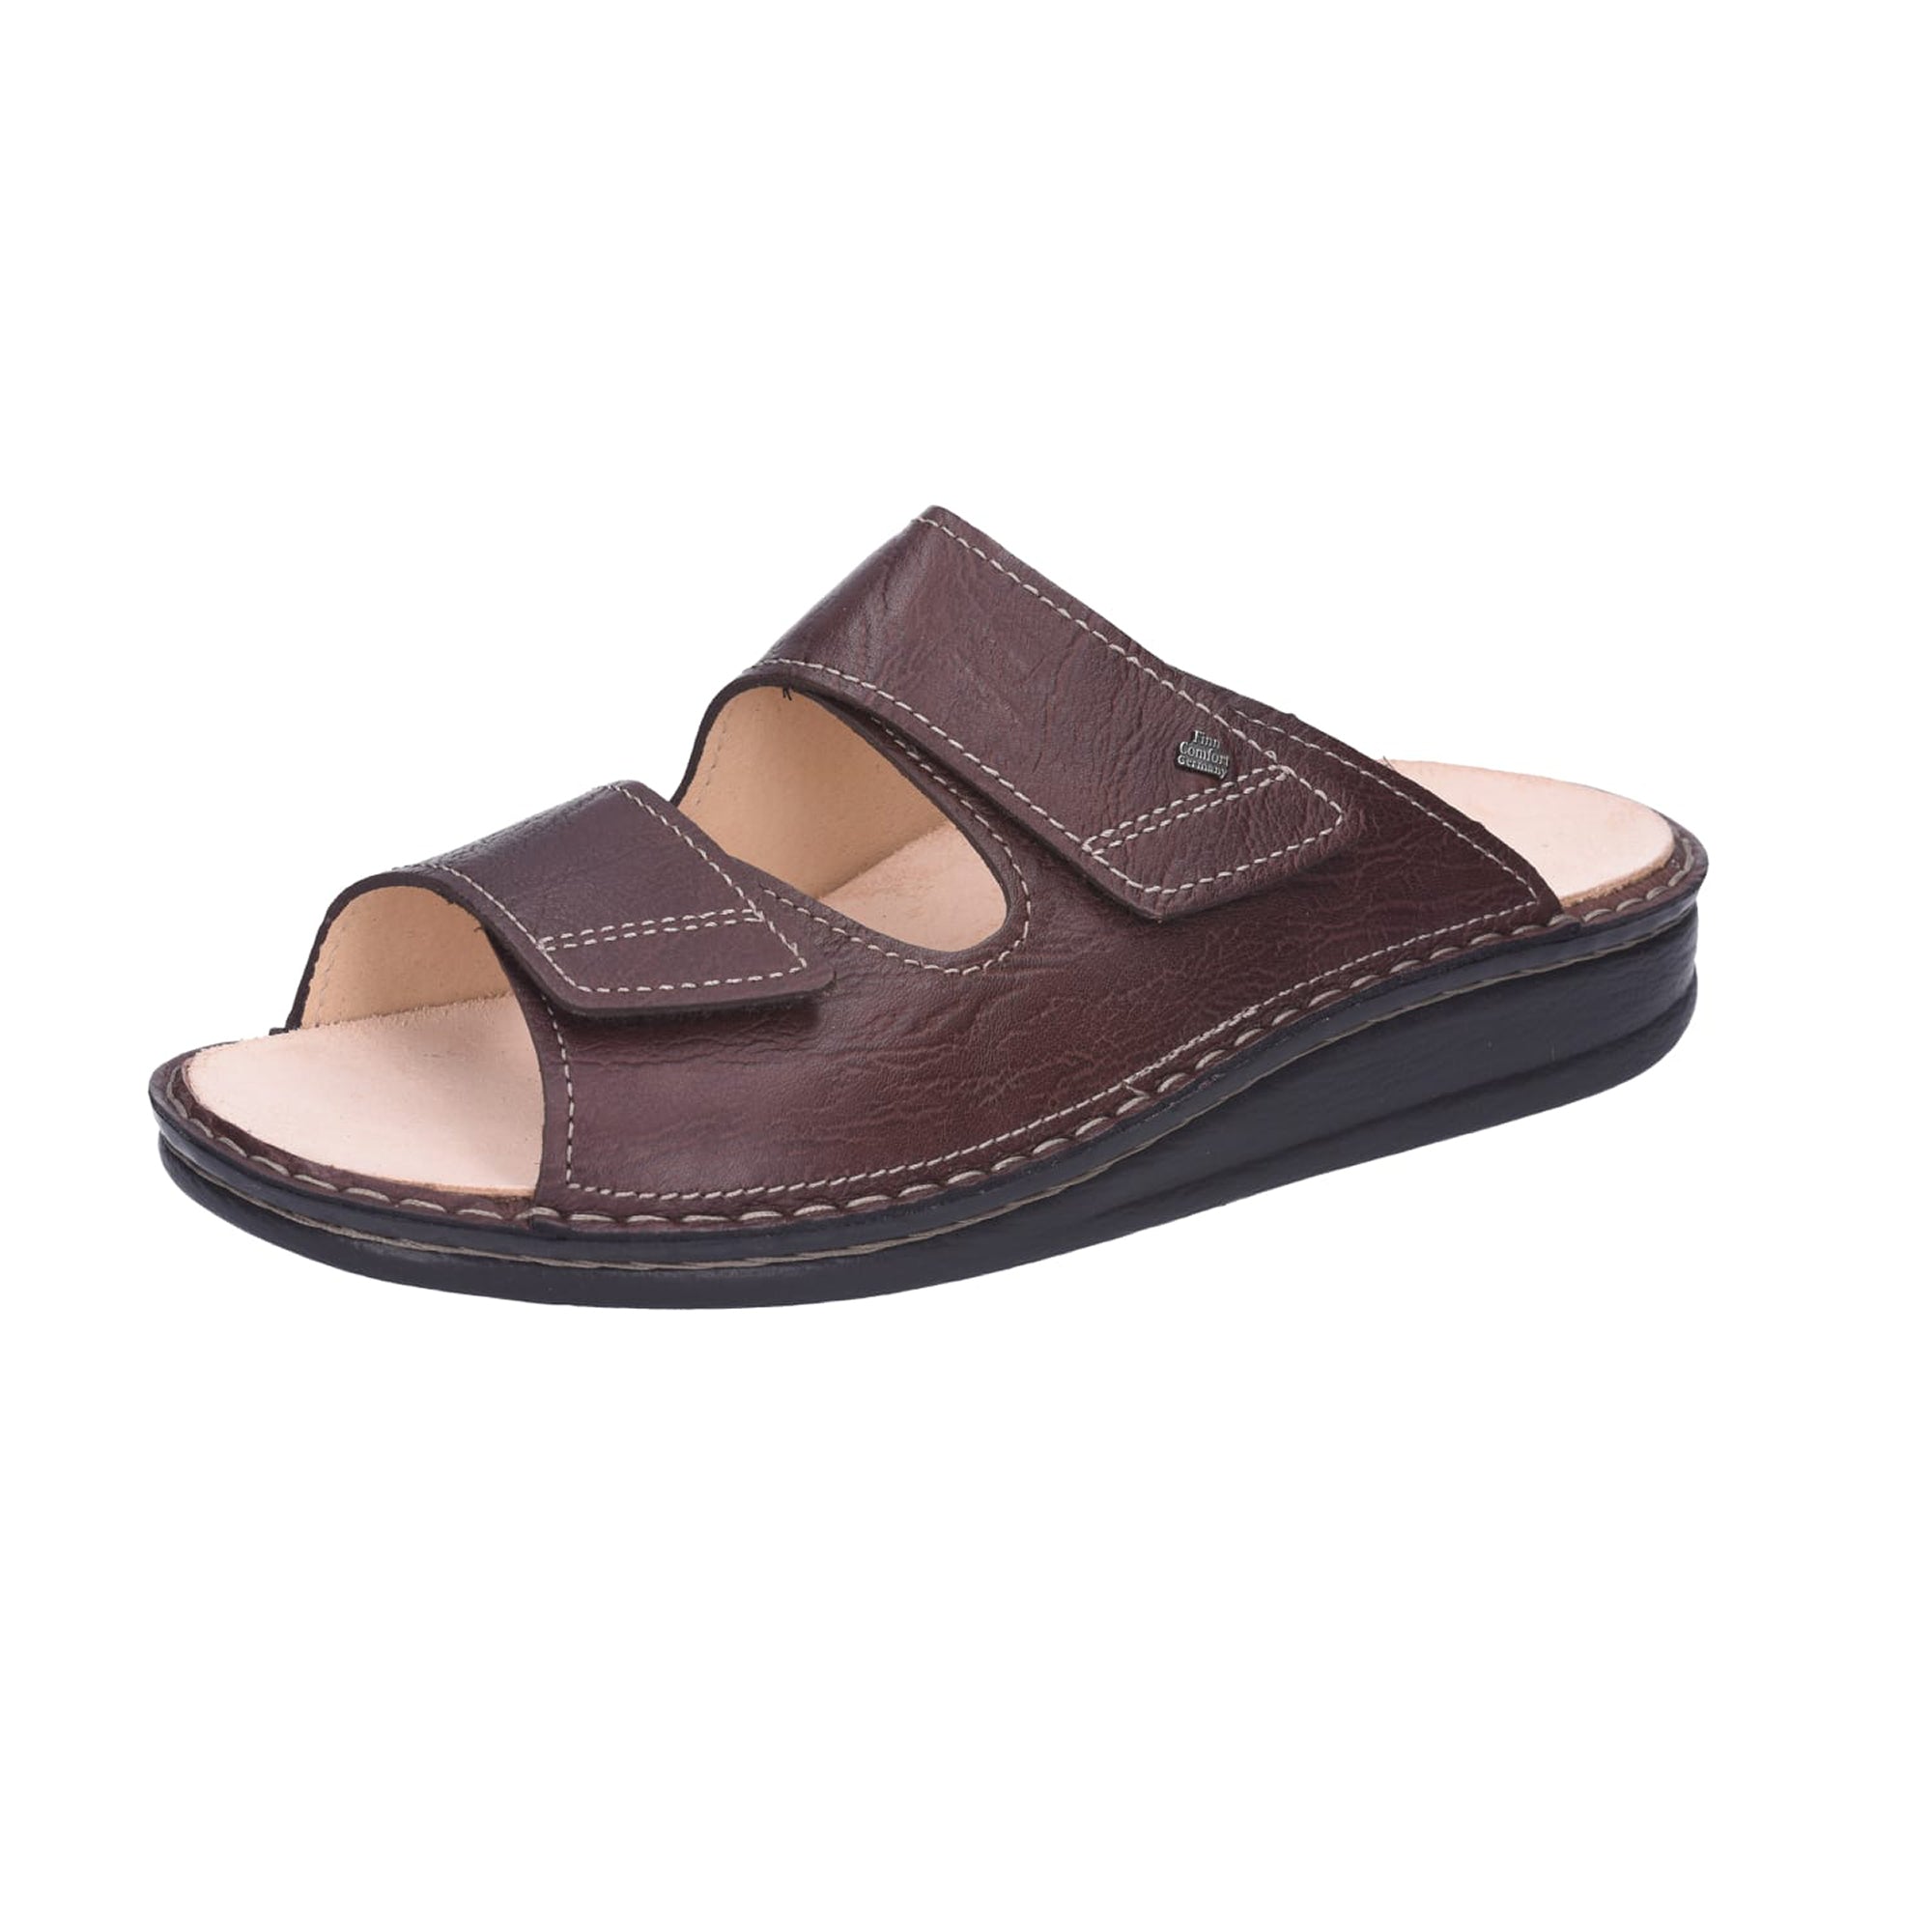 Finn Comfort Riad Men's Comfort Sandals - Stylish Brown Leather